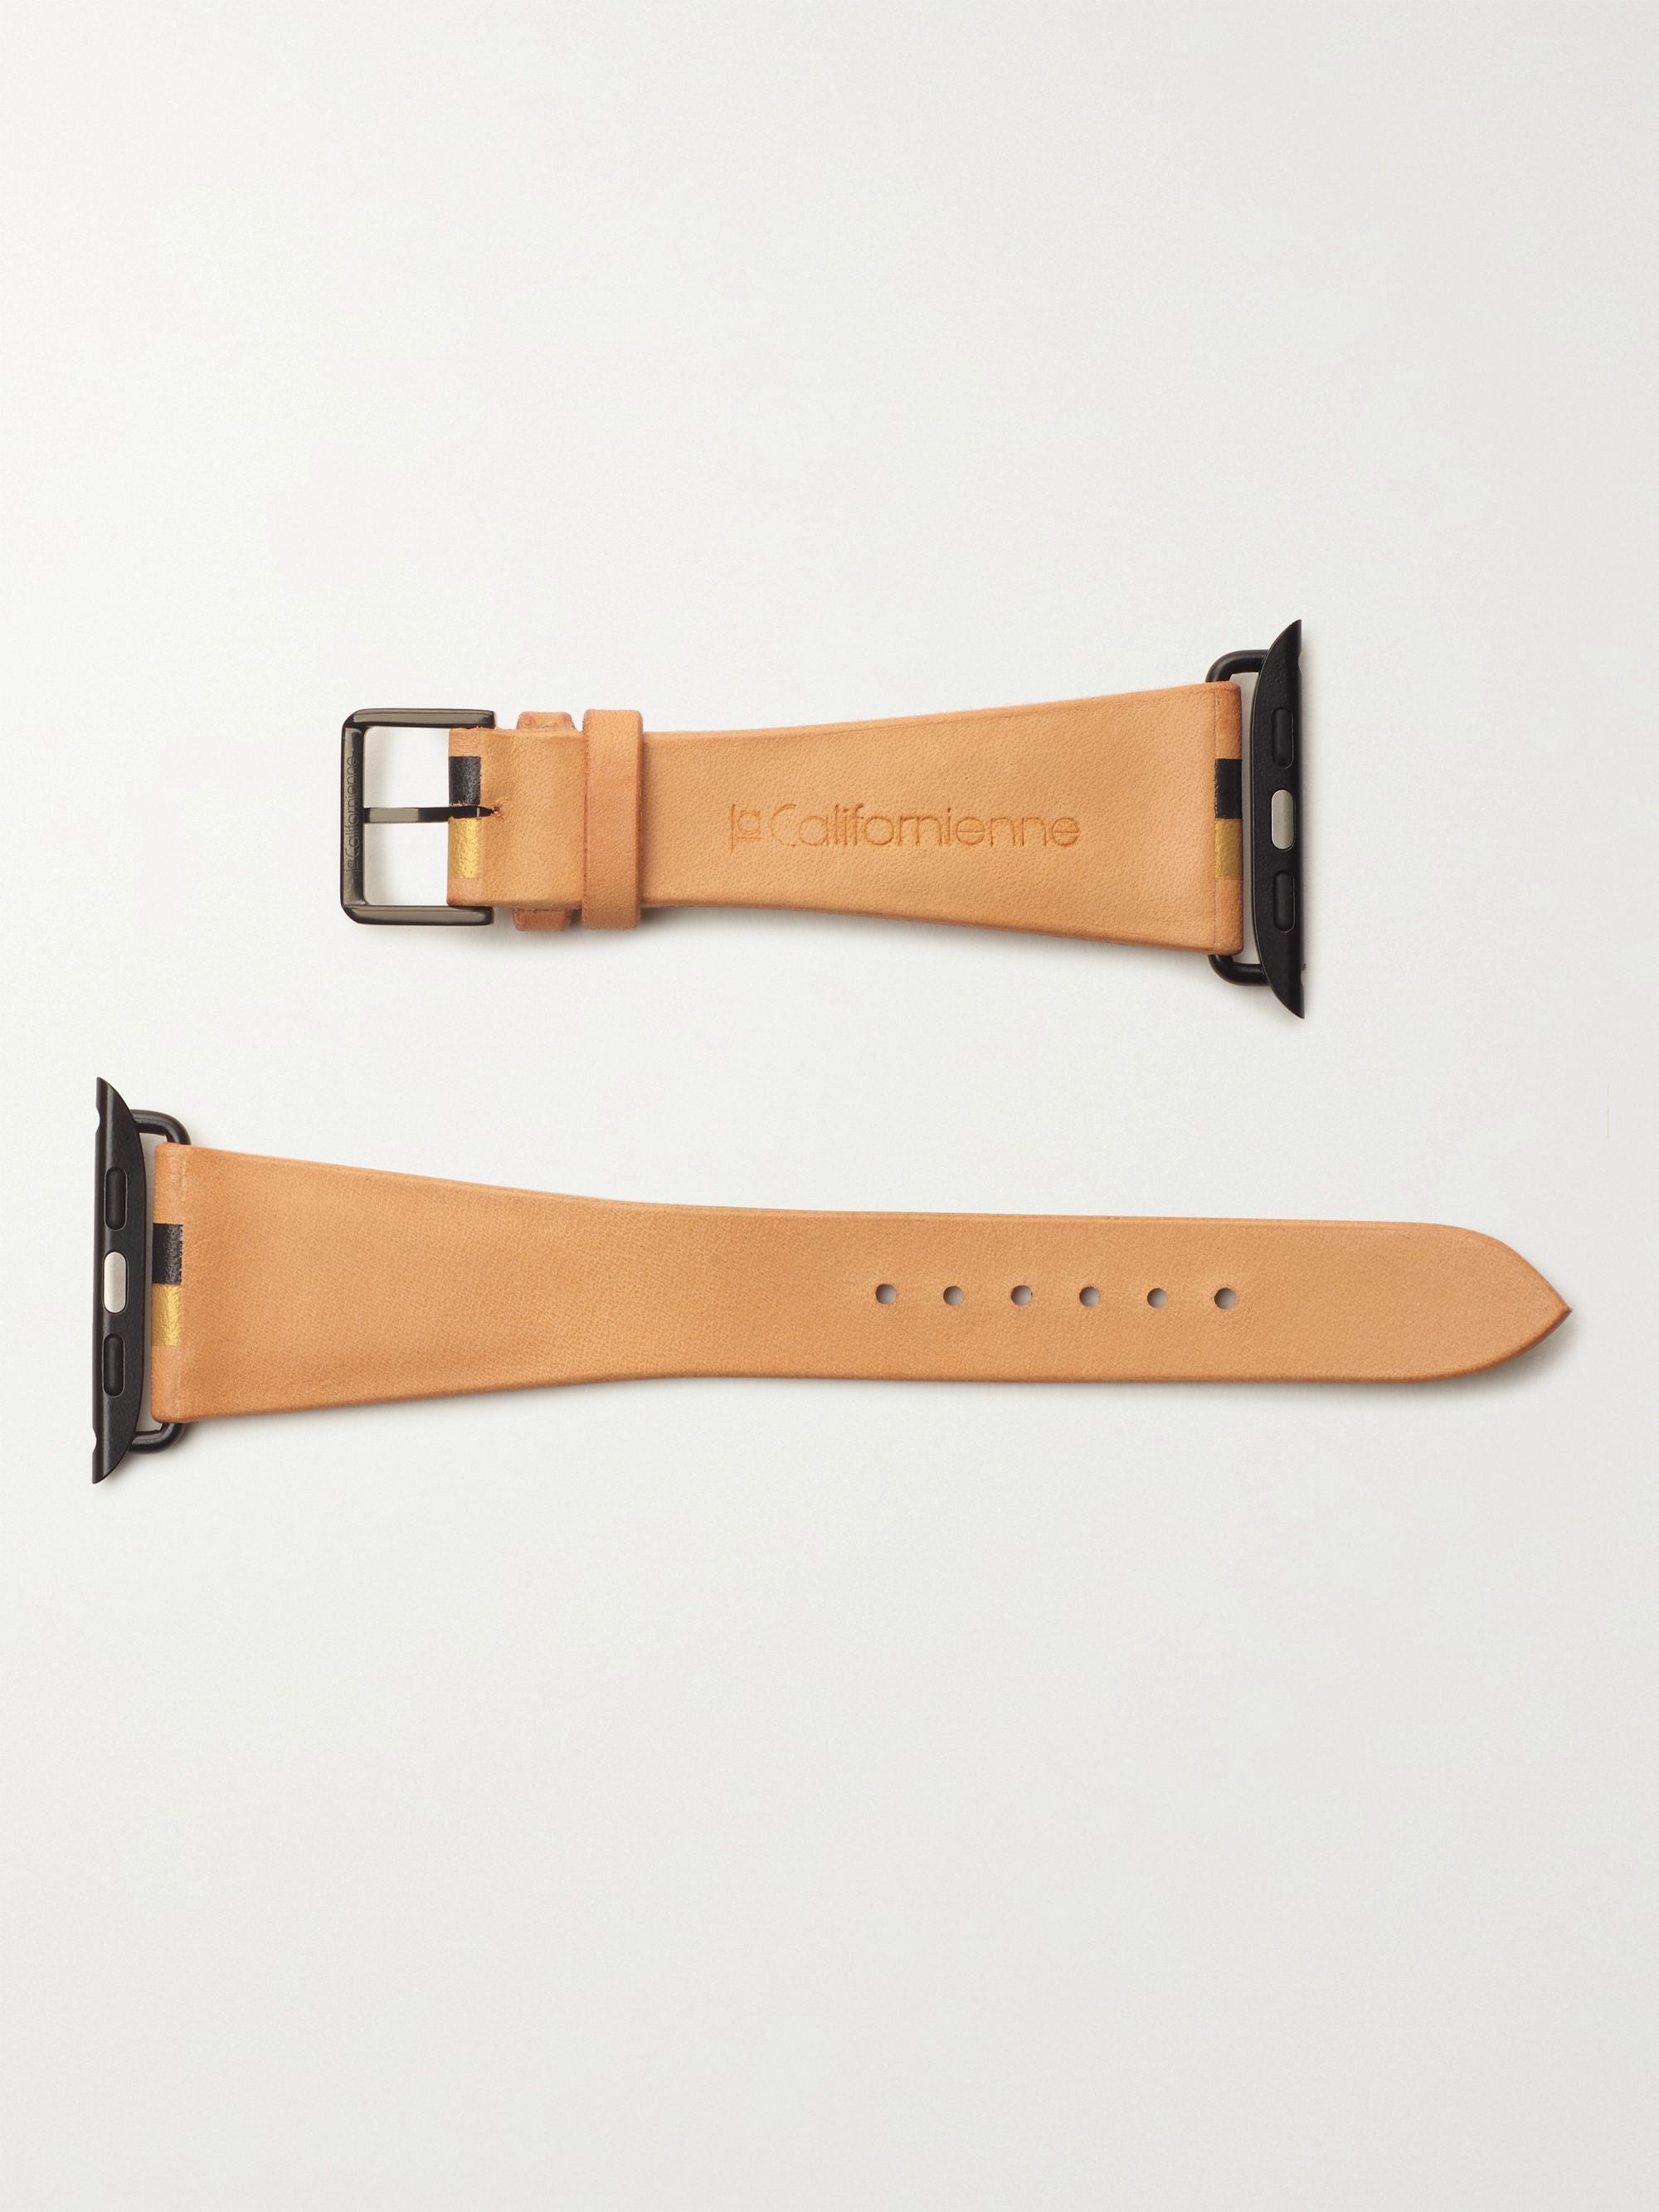 LACALIFORNIENNE Roxy Striped Leather Watch Strap